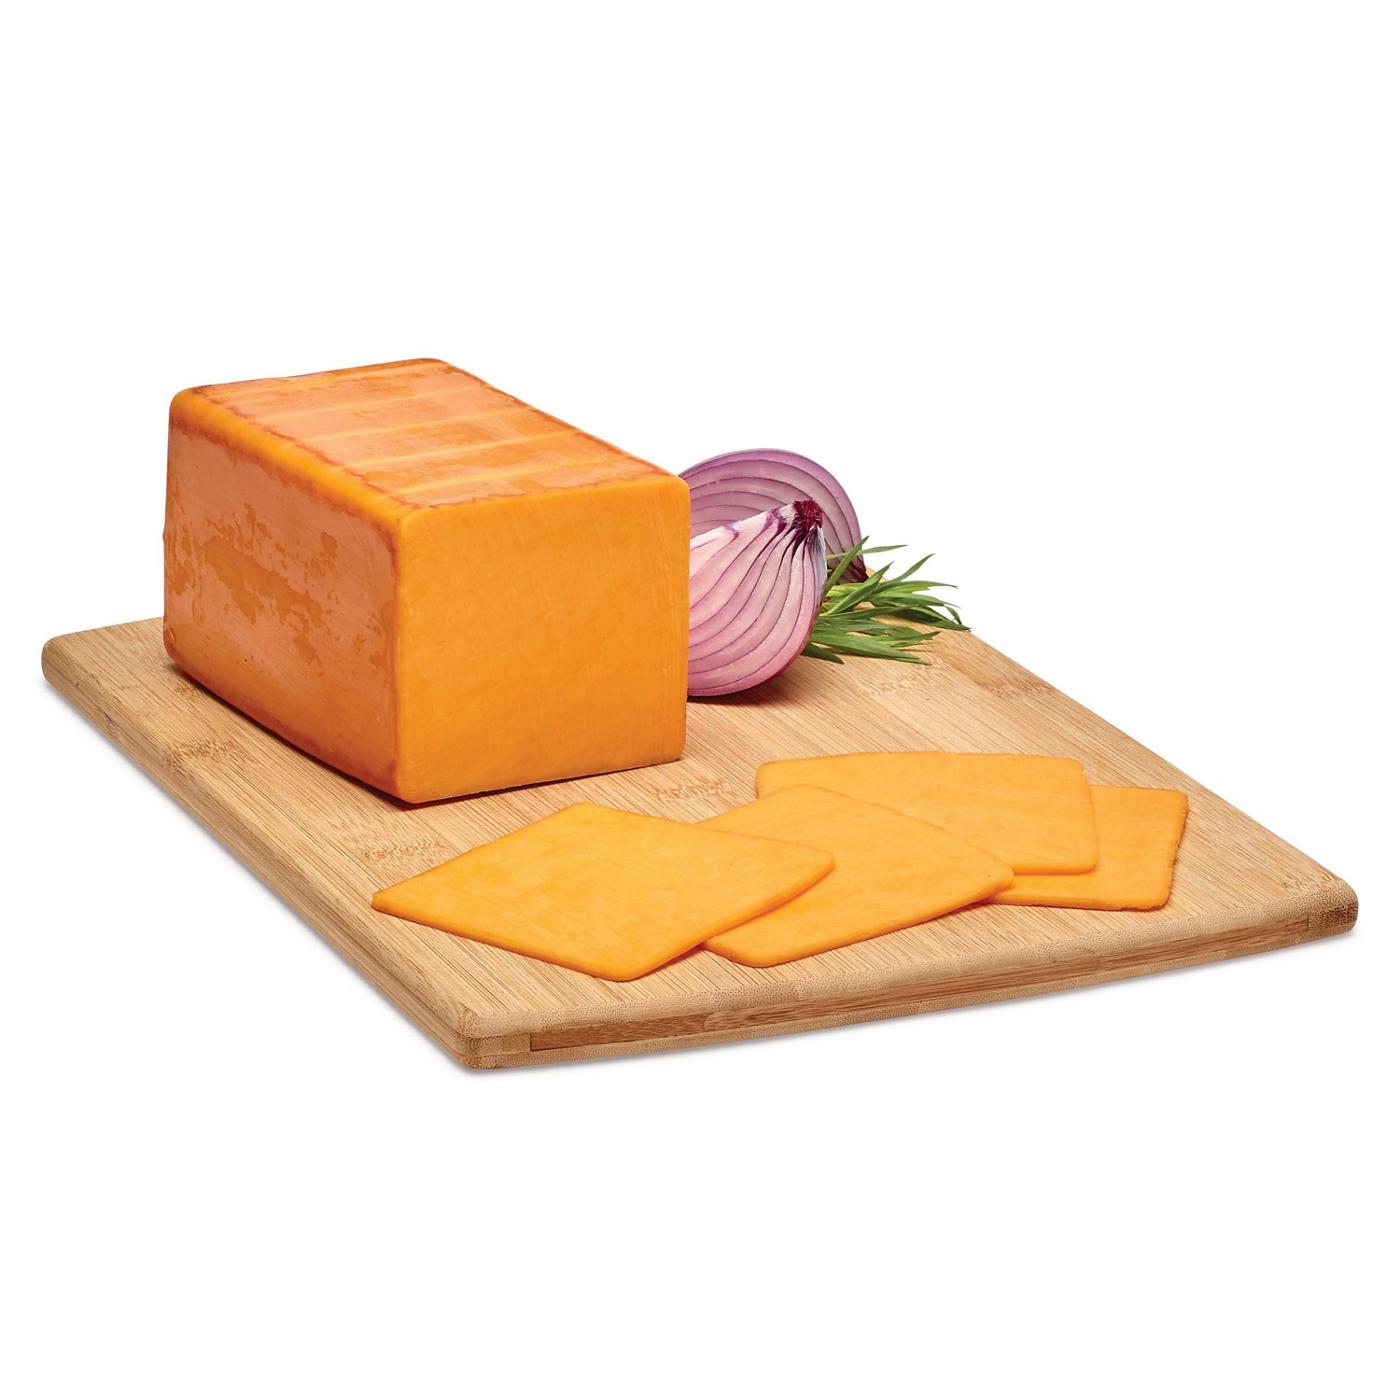 H-E-B Deli Sliced Post Oak Smoked Cheddar Cheese; image 1 of 2